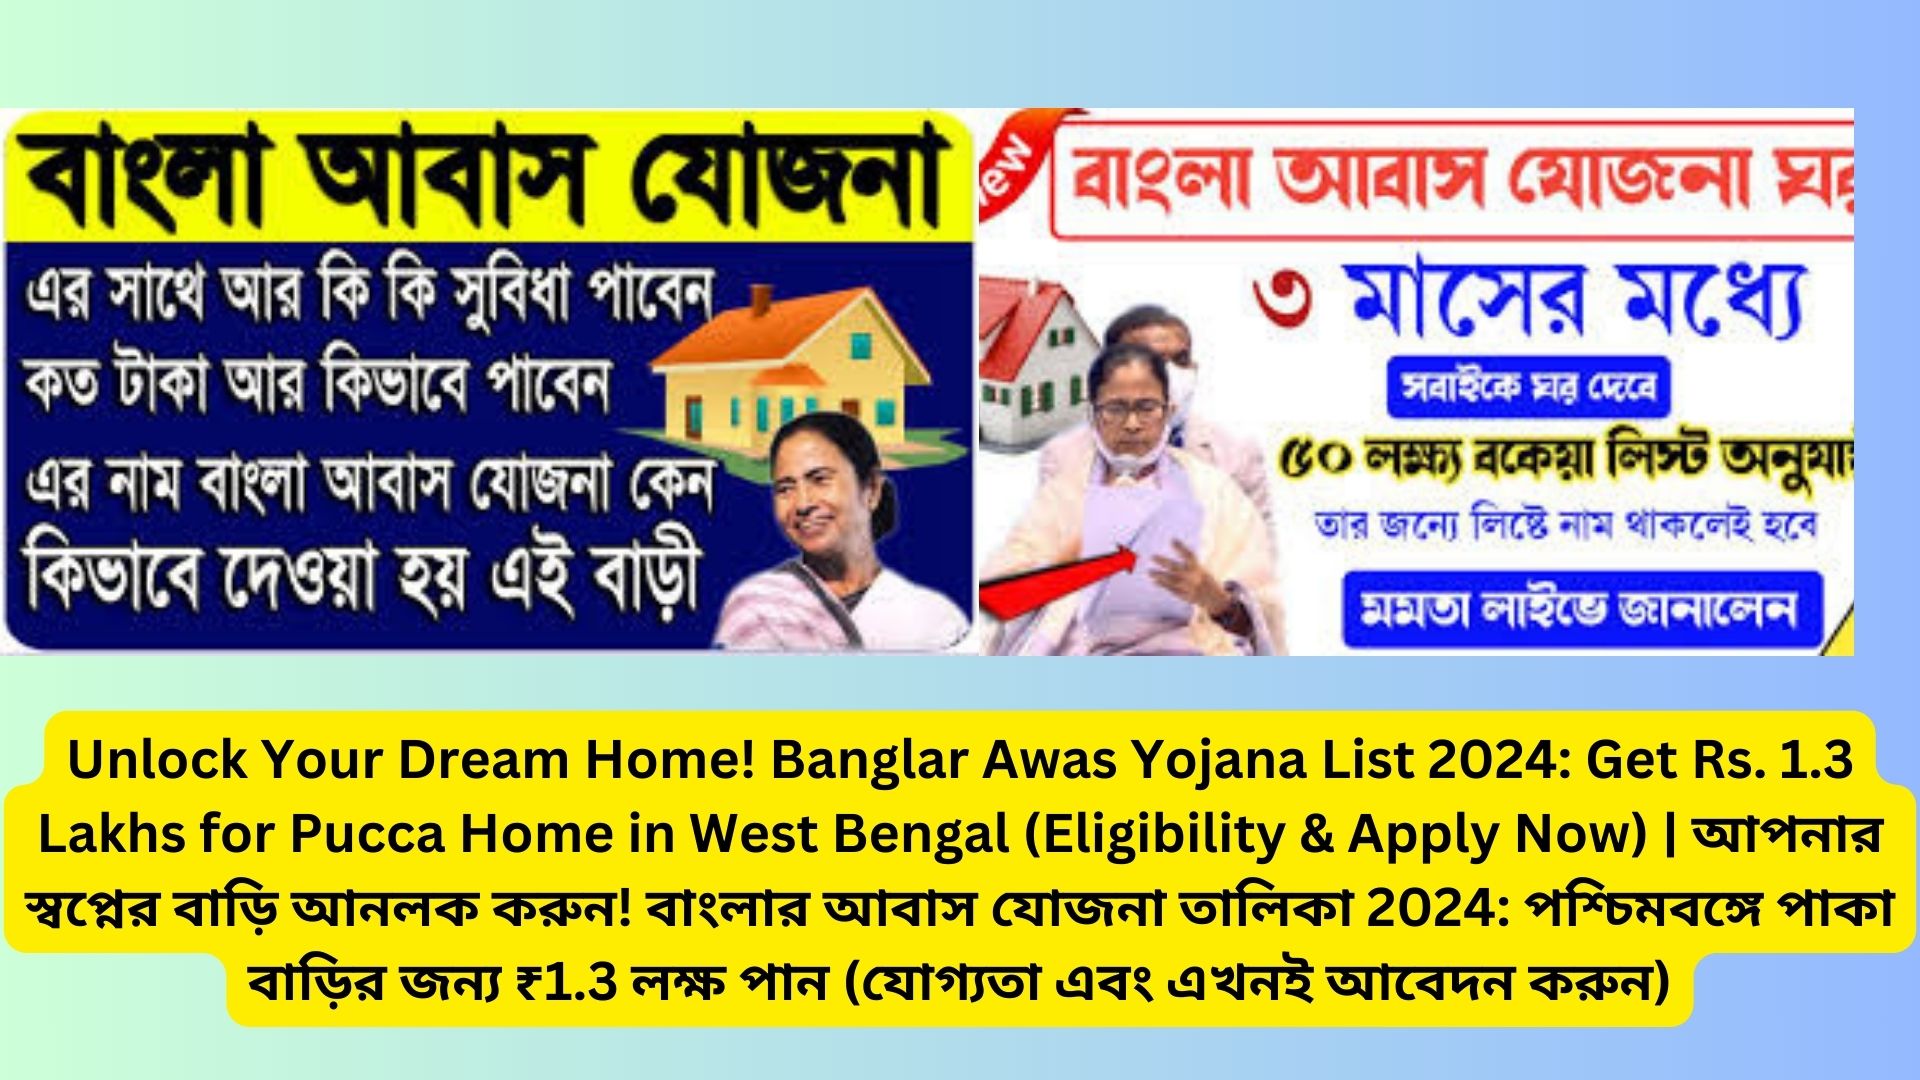 Unlock Your Dream Home! Banglar Awas Yojana List 2024: Get Rs. 1.3 Lakhs for Pucca Home in West Bengal (Eligibility & Apply Now) | আপনার স্বপ্নের বাড়ি আনলক করুন! বাংলার আবাস যোজনা তালিকা 2024: পশ্চিমবঙ্গে পাকা বাড়ির জন্য ₹1.3 লক্ষ পান (যোগ্যতা এবং এখনই আবেদন করুন)